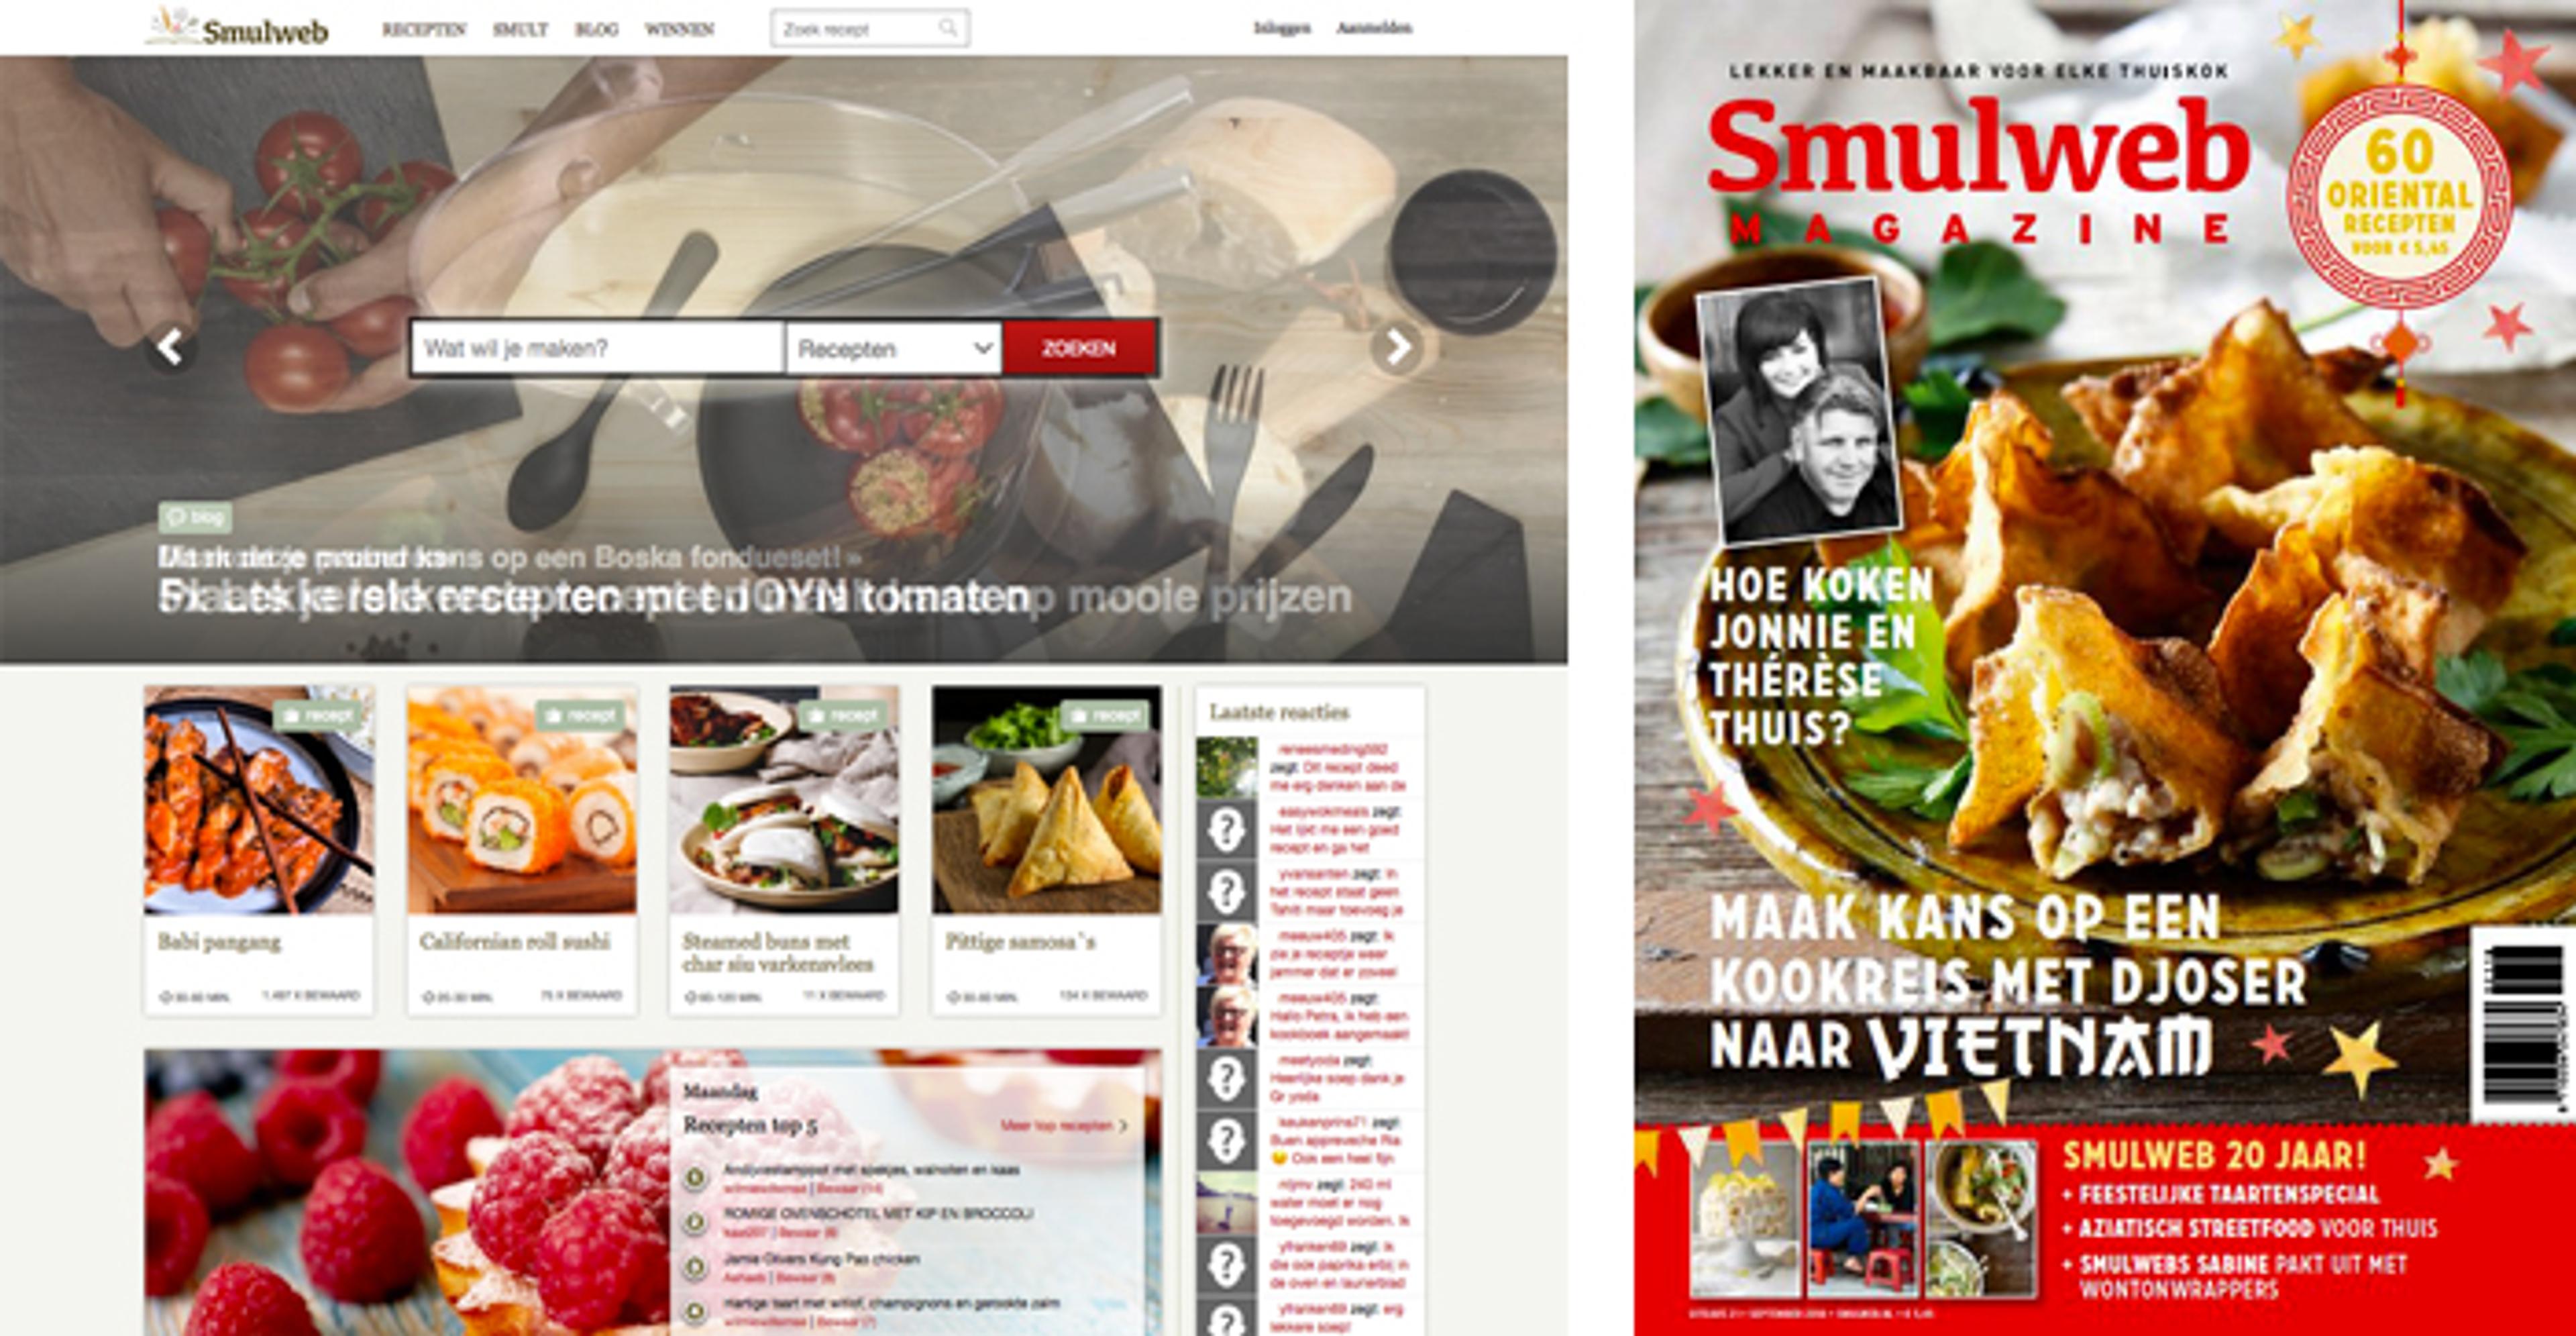 Smulweb.nl en Smulweb Magazine overgenomen door Jumbo Supermarkten BV